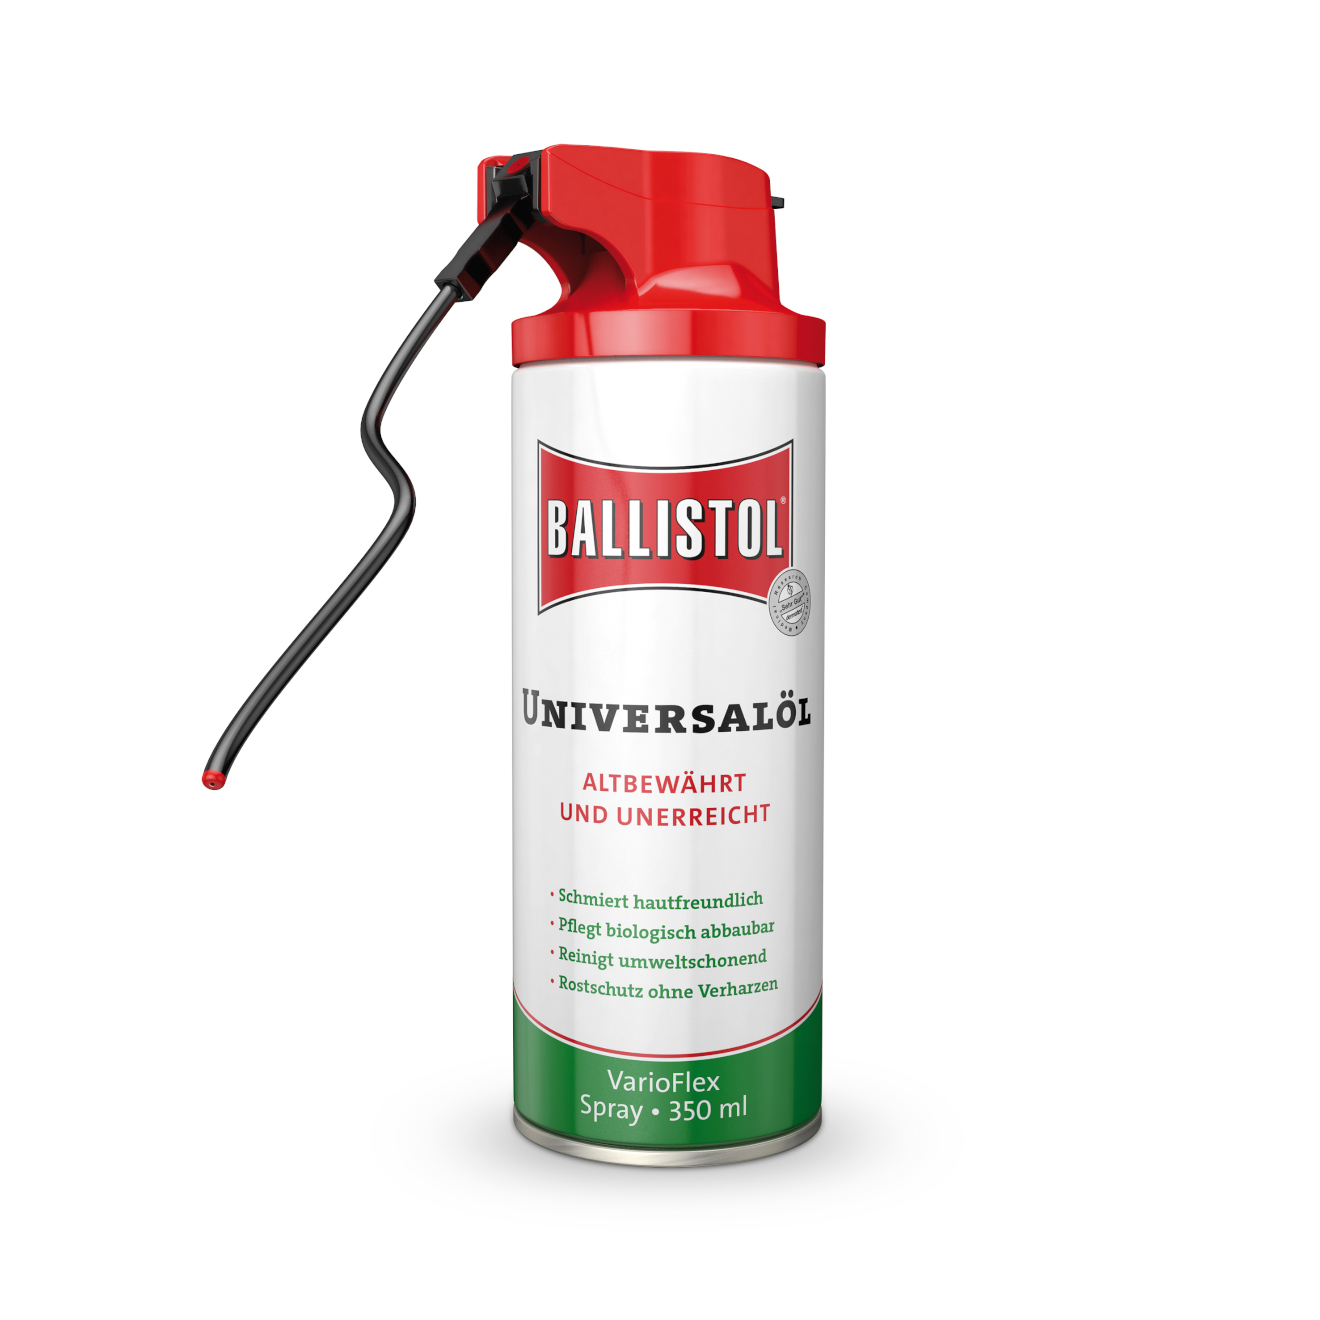 BALLISTOL Universalöl VarioFlex Spray 350 ml